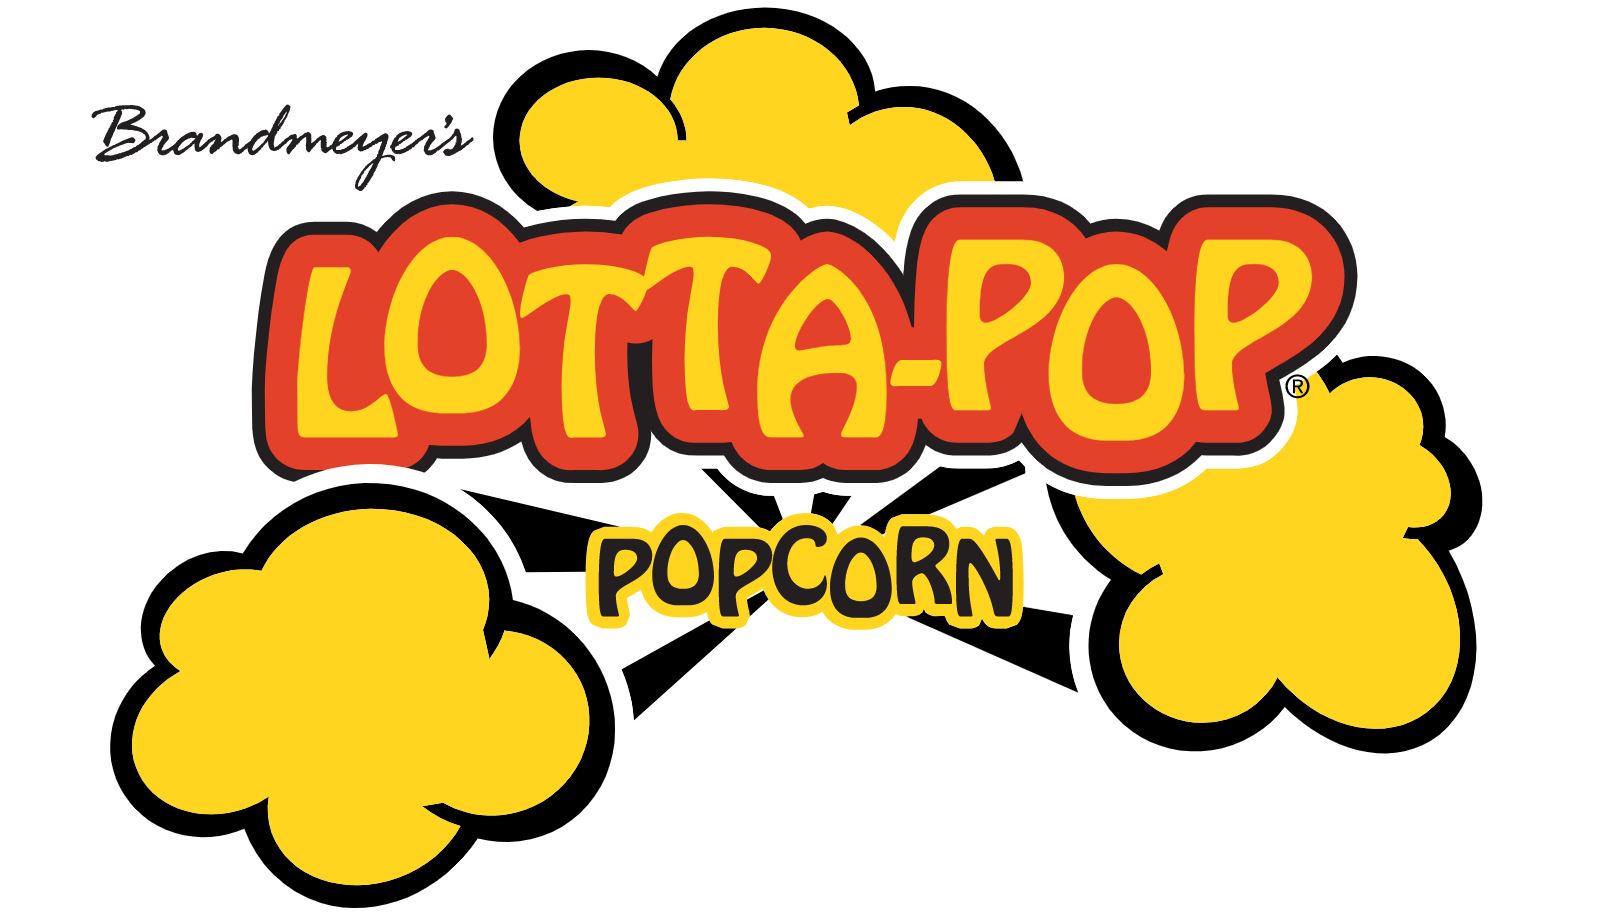 Lotta-Pop Popcorn